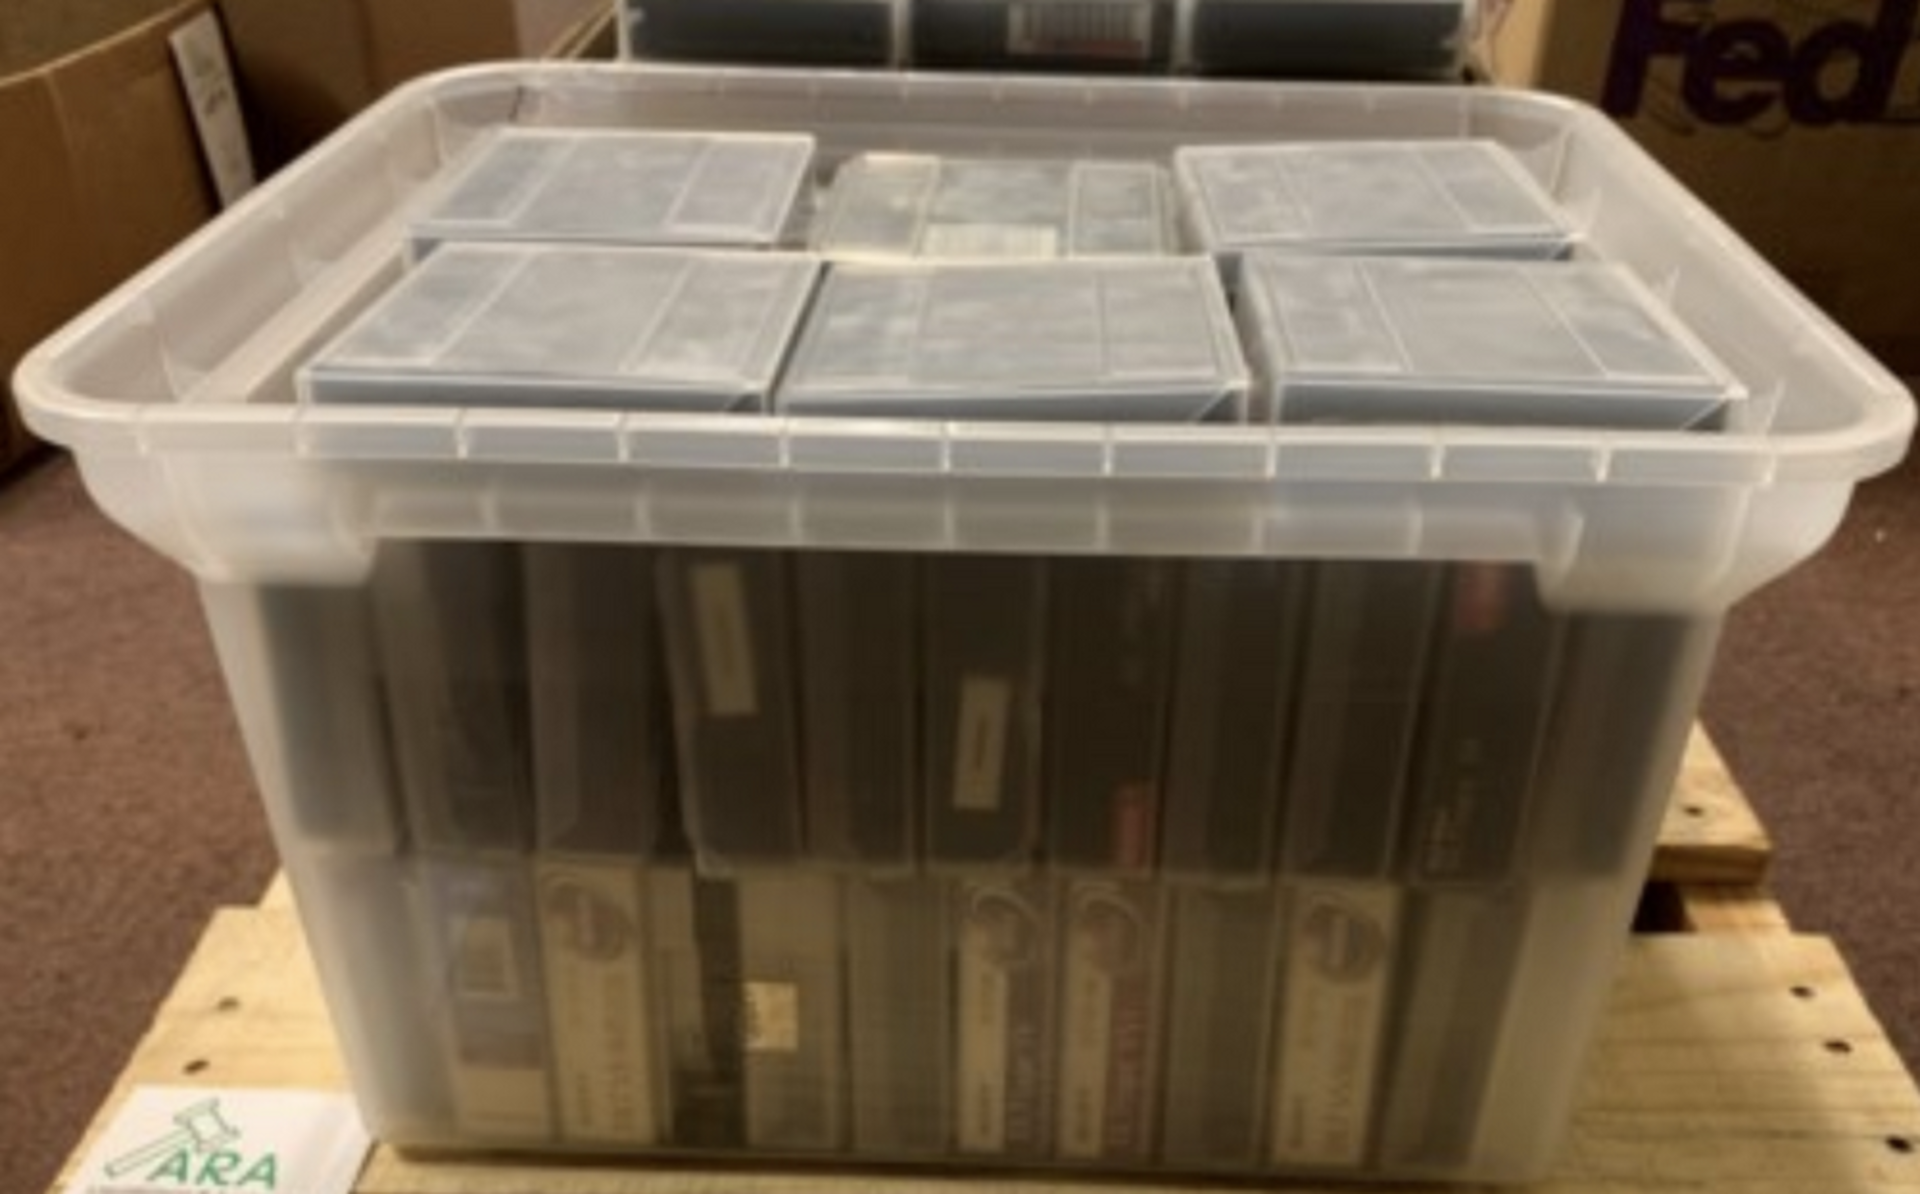 Large lot of Imation DLT Tape IV 80GB Cartridges - Image 5 of 6